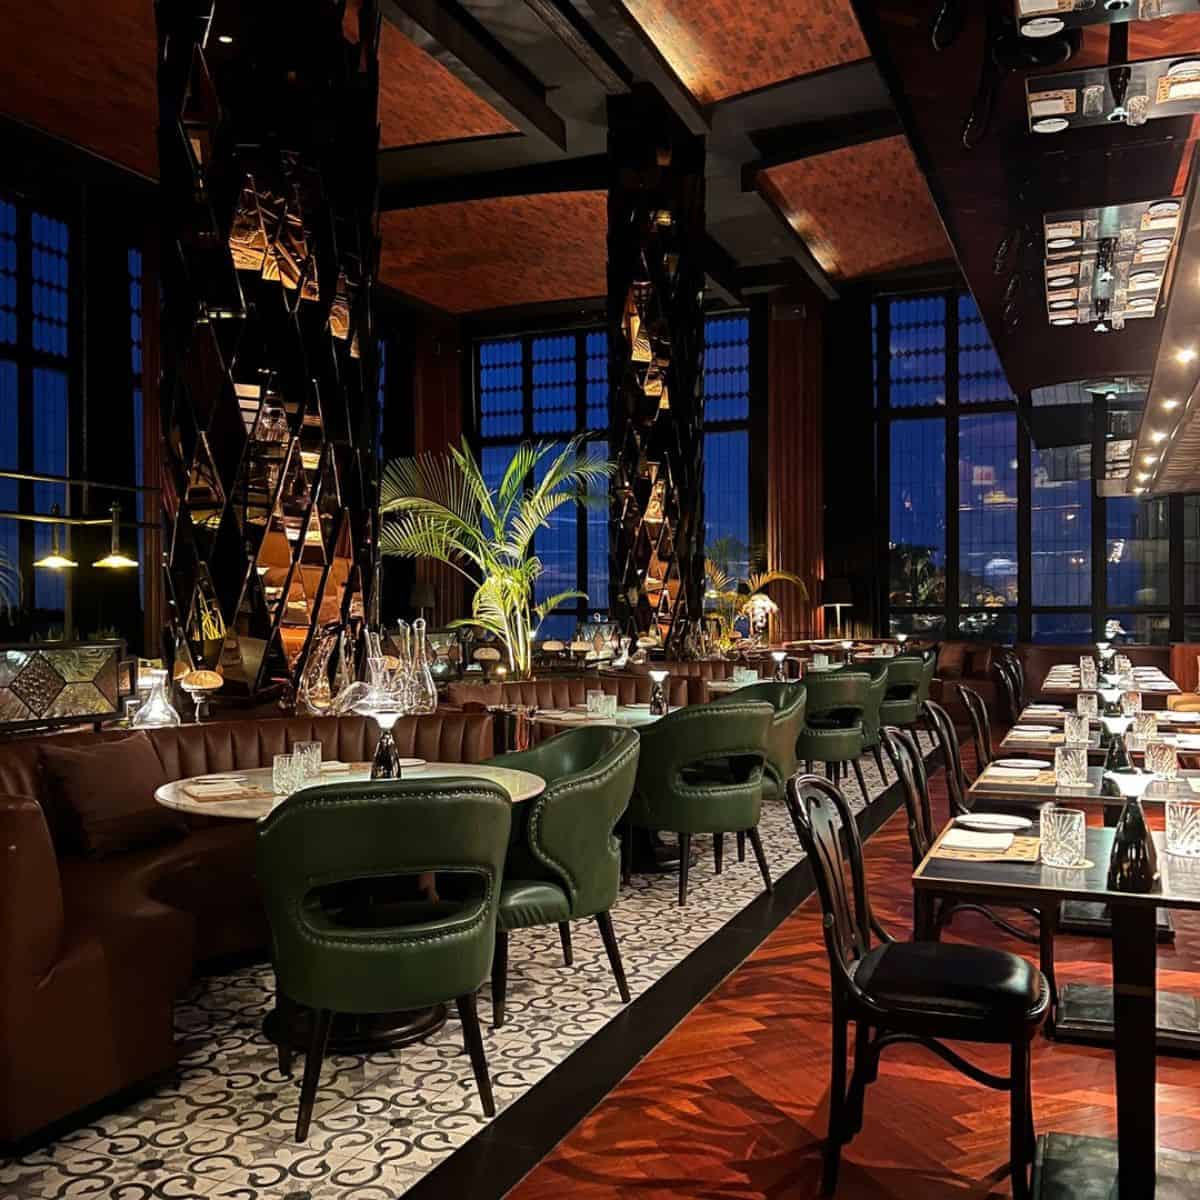 The classy fine dine interior design of The Plantation Grill in a night mode